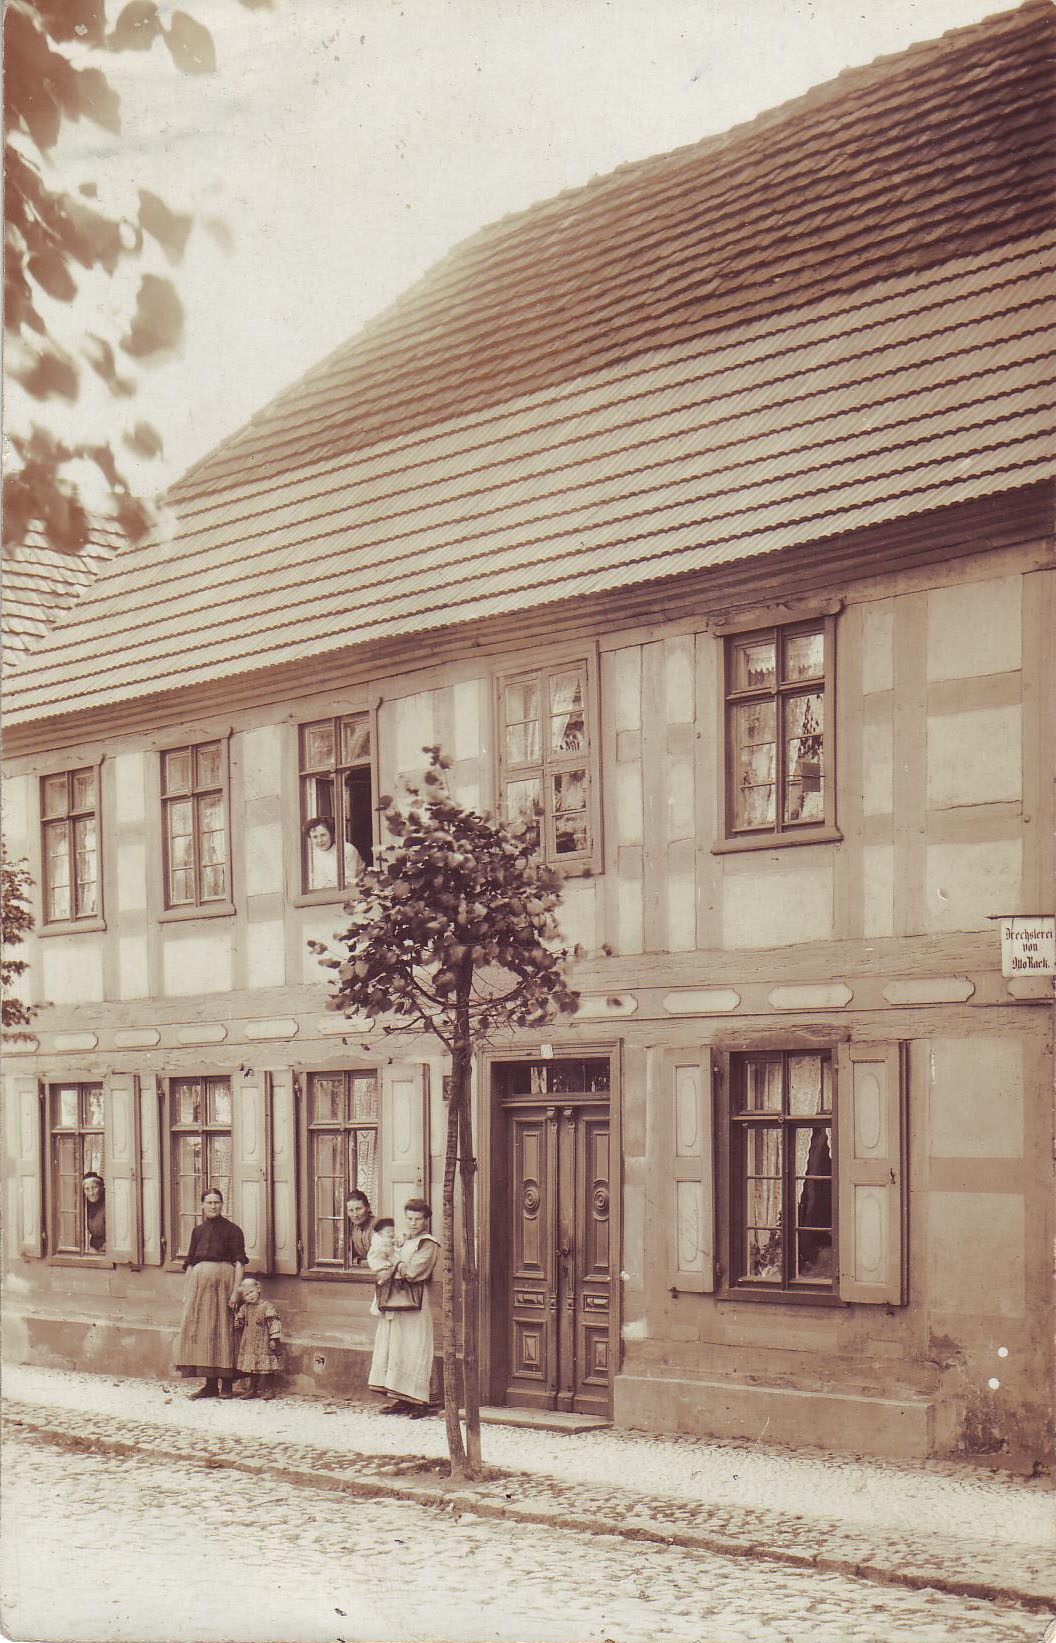 Postkarte Oderberg, Berliner Str. 21, Kalkhoff, um 1910 (Binnenschifffahrtsmuseum Oderberg CC BY-NC-SA)